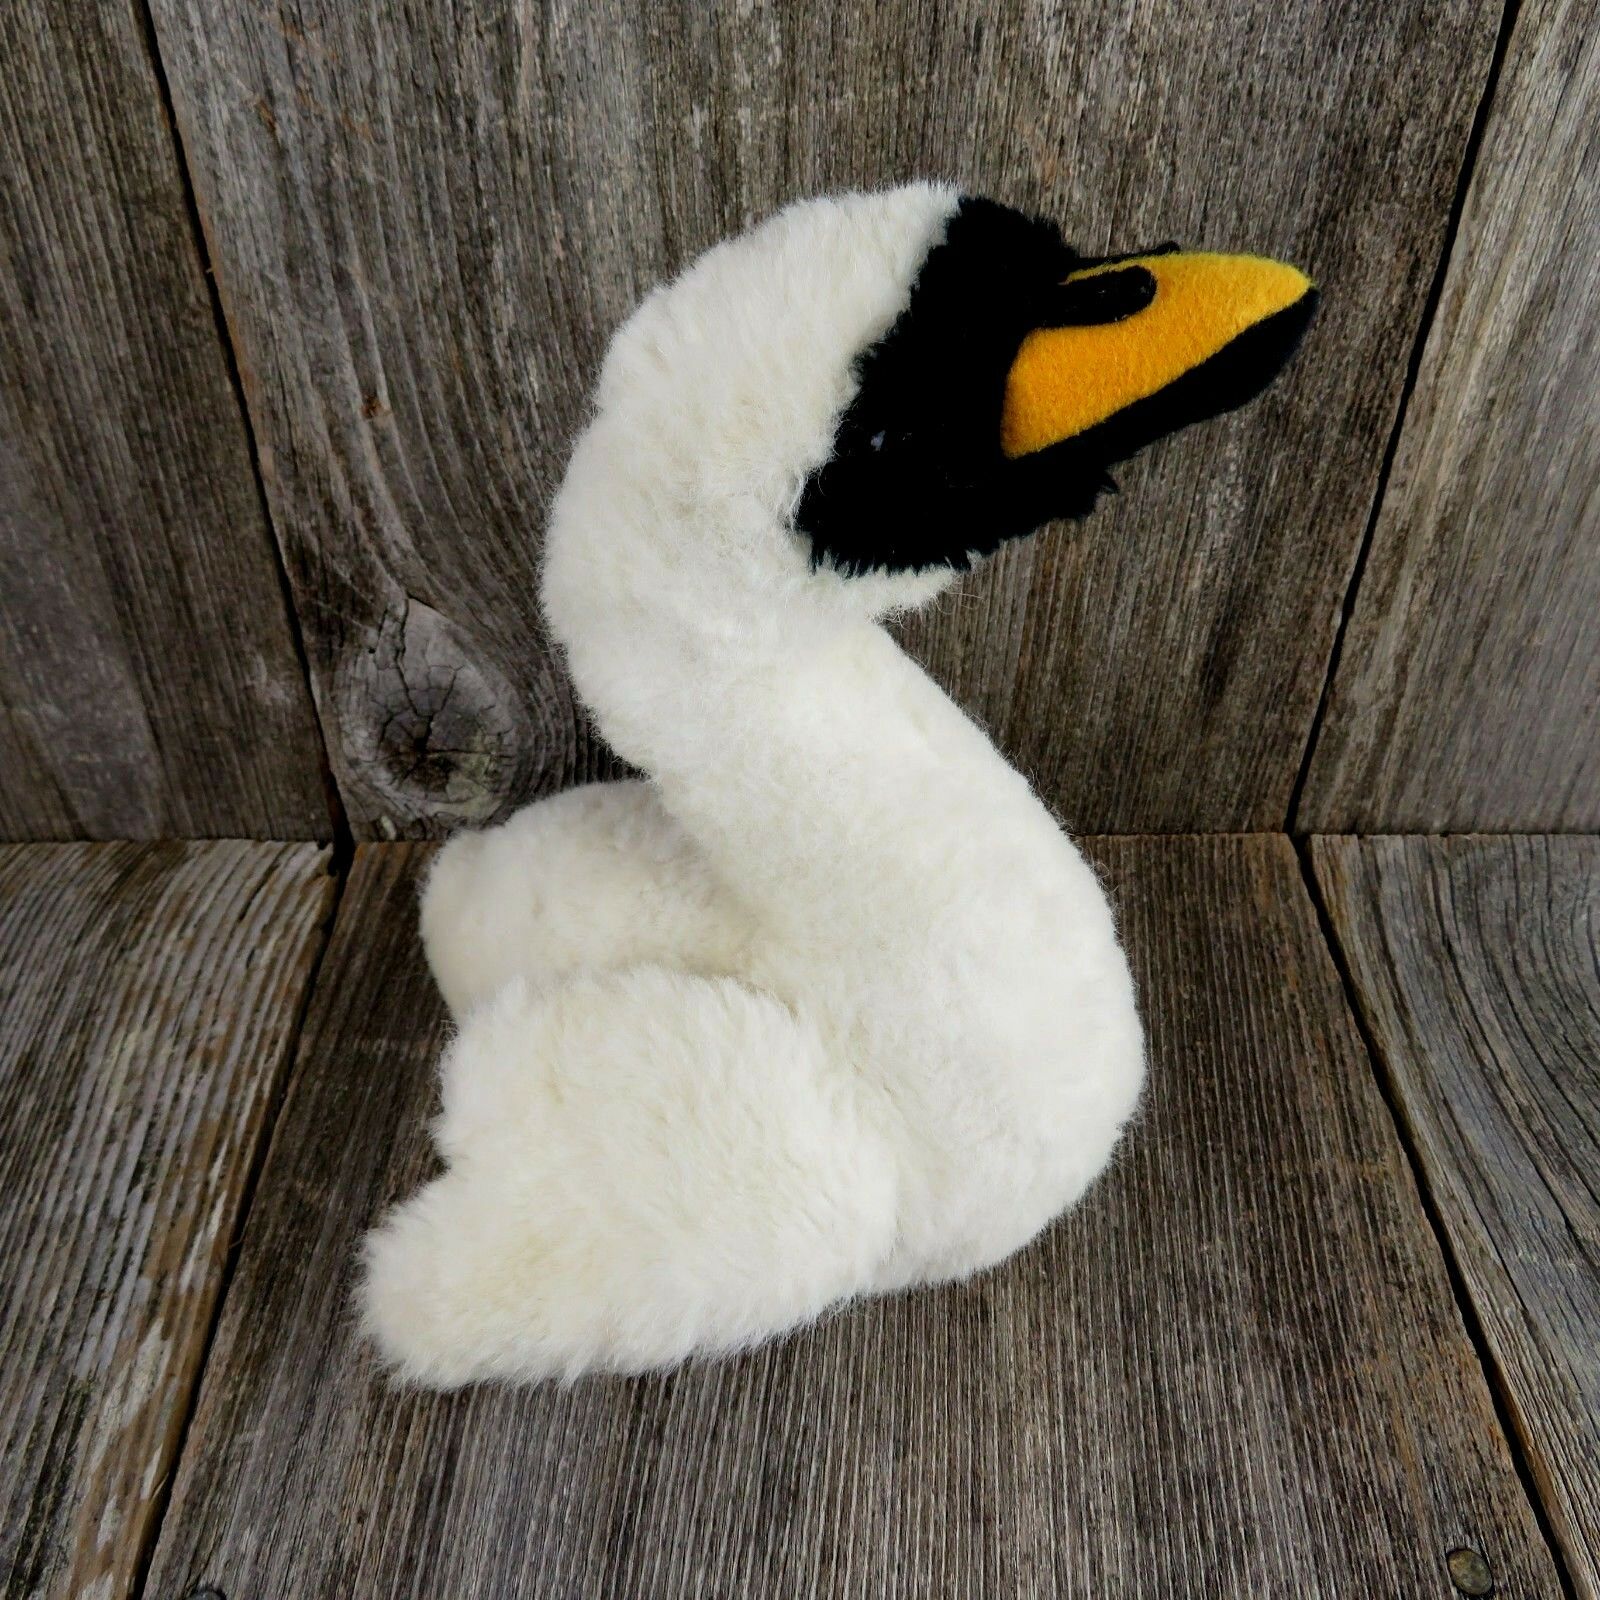 Vintage Swan Plush Goose Bird Stuffed Animal Dakin 1981 White - At Grandma's Table